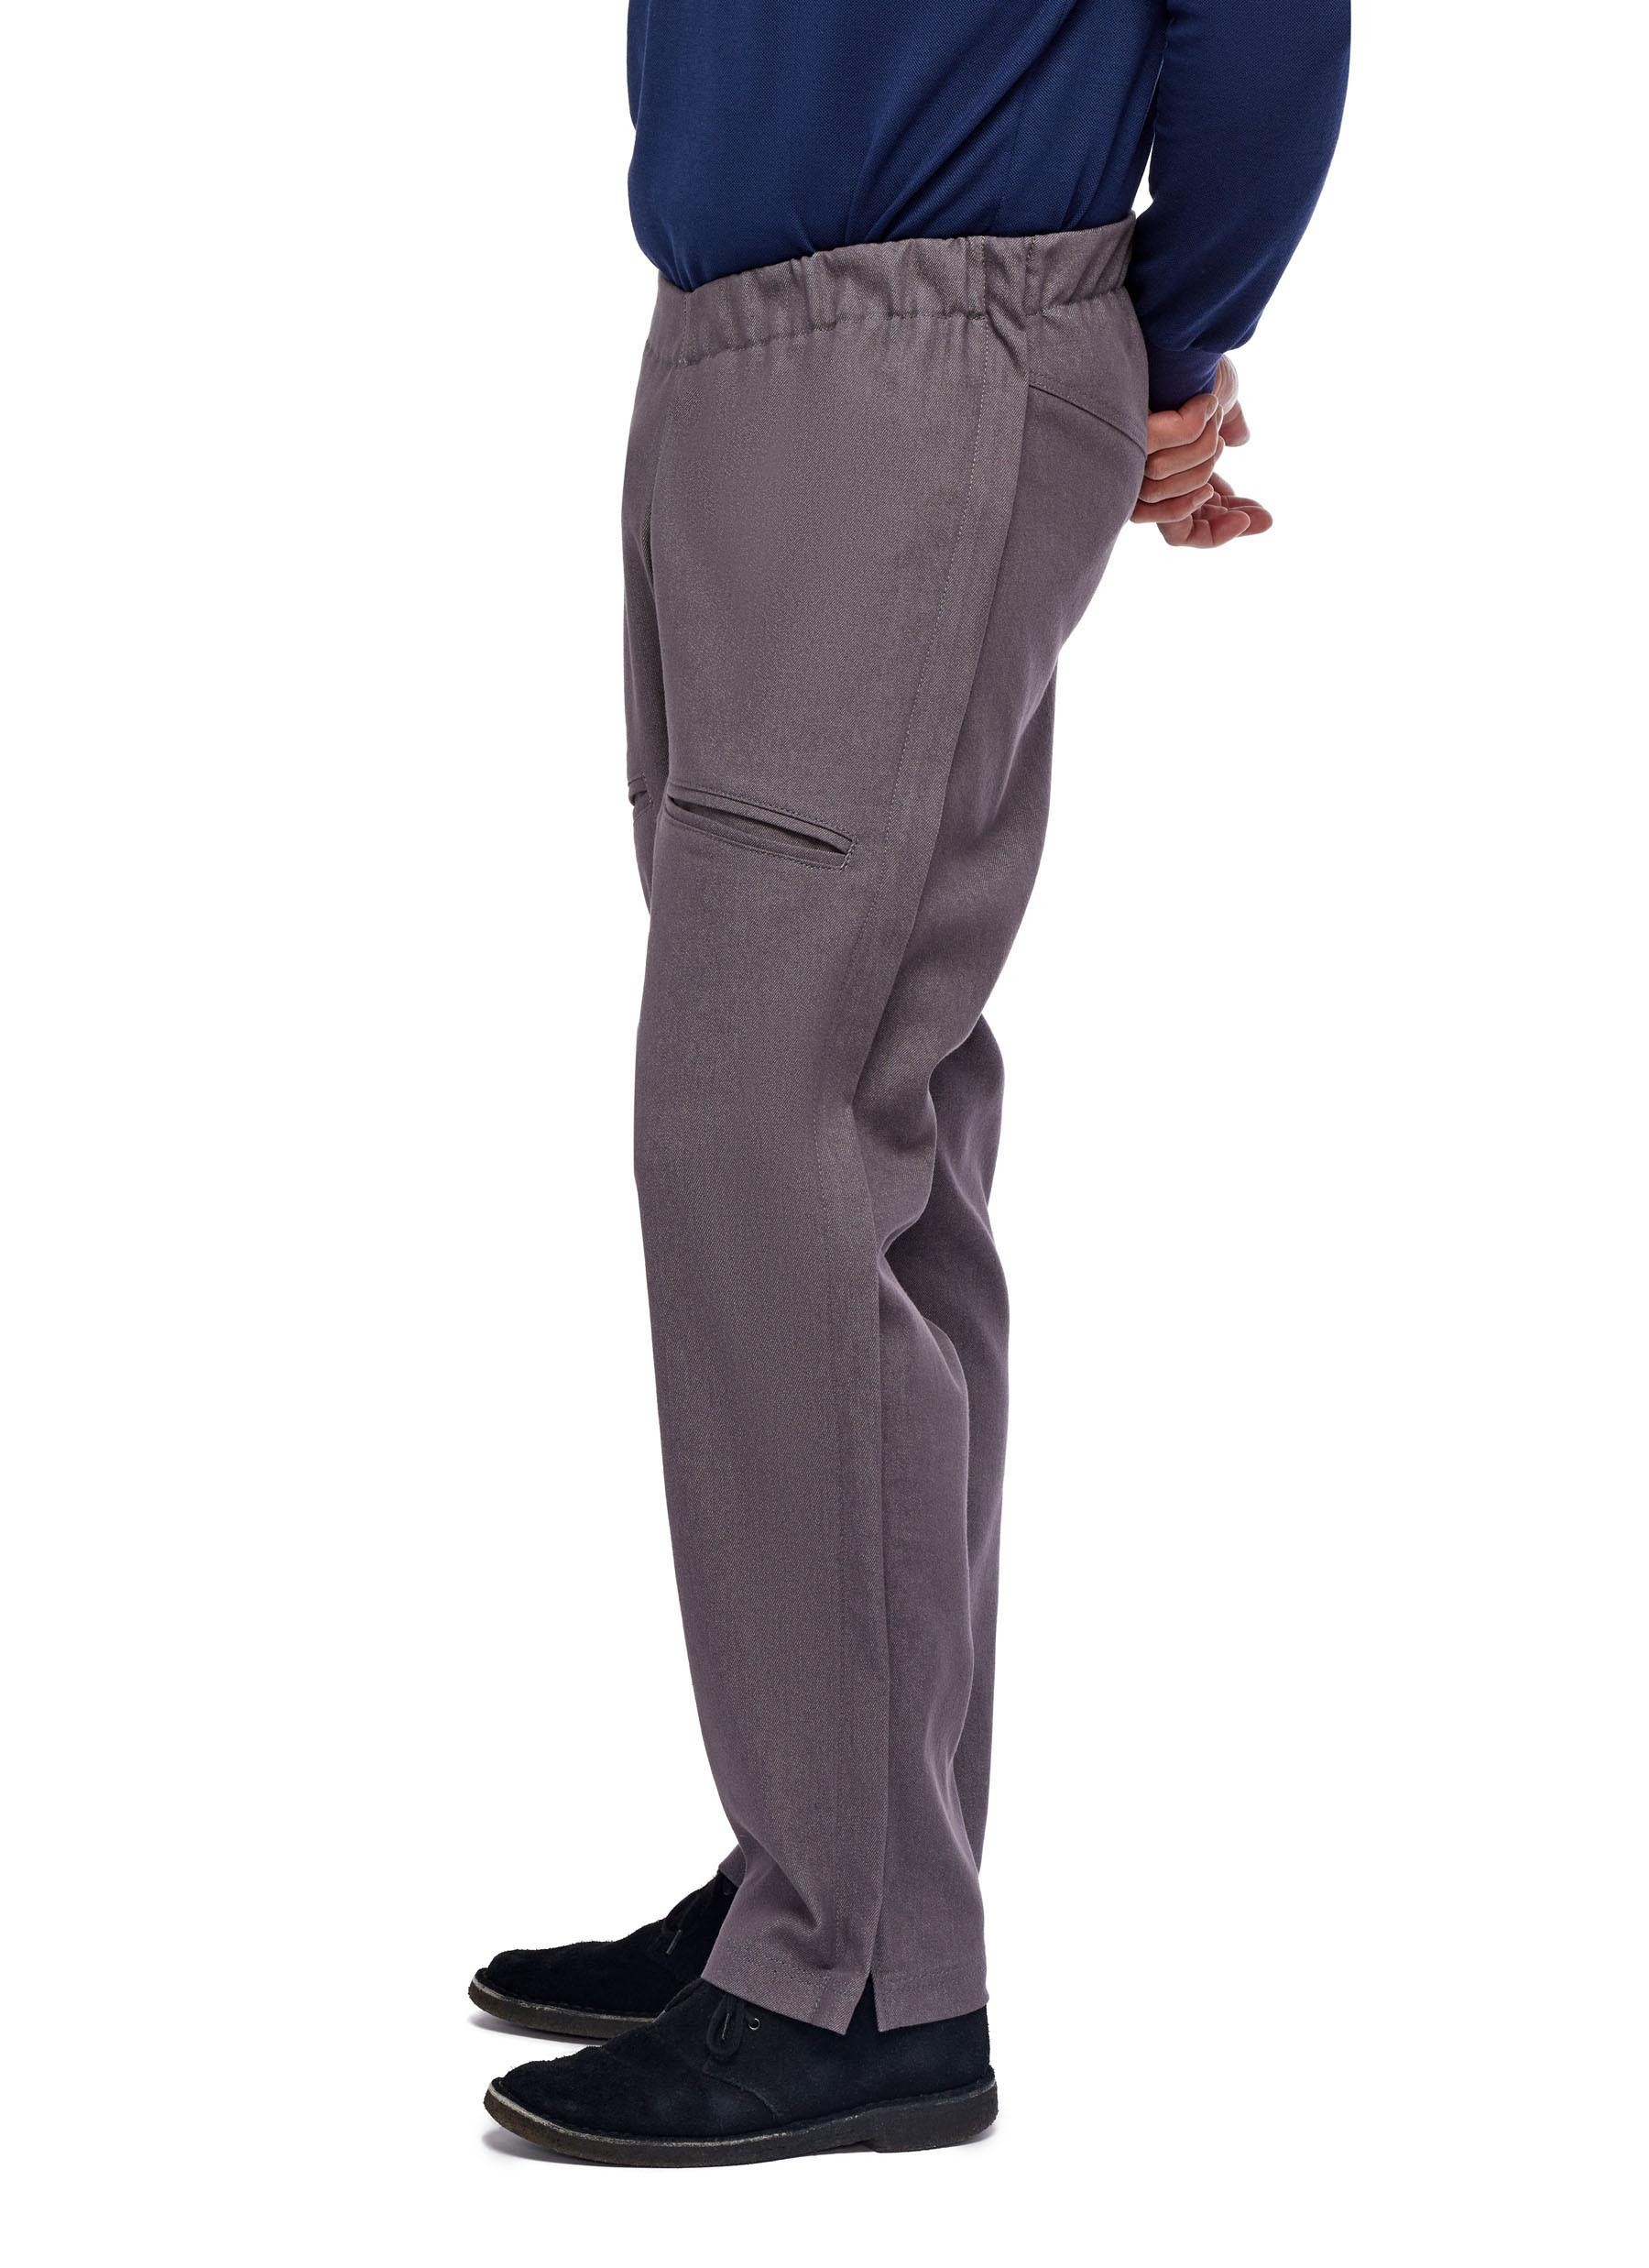 Mens Cargo Khaki Pants  Khaki Pants Side Pocket  Mens Streetwear Pants   Streetwear  Aliexpress